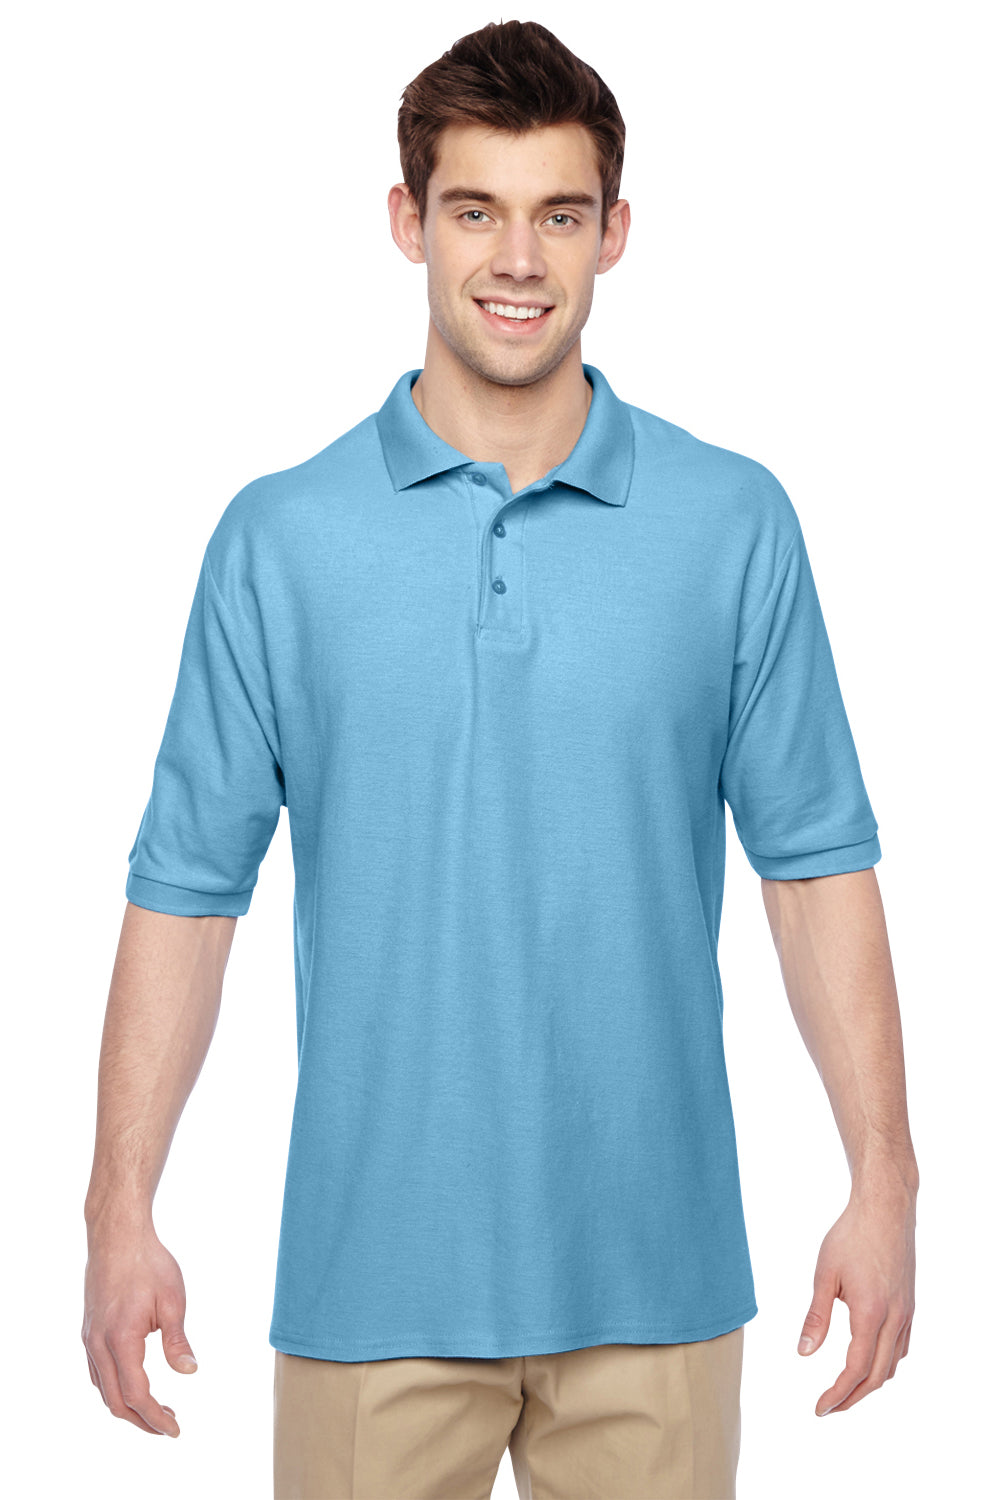 Jerzees 537MSR Mens Easy Care Moisture Wicking Short Sleeve Polo Shirt Light Blue Front